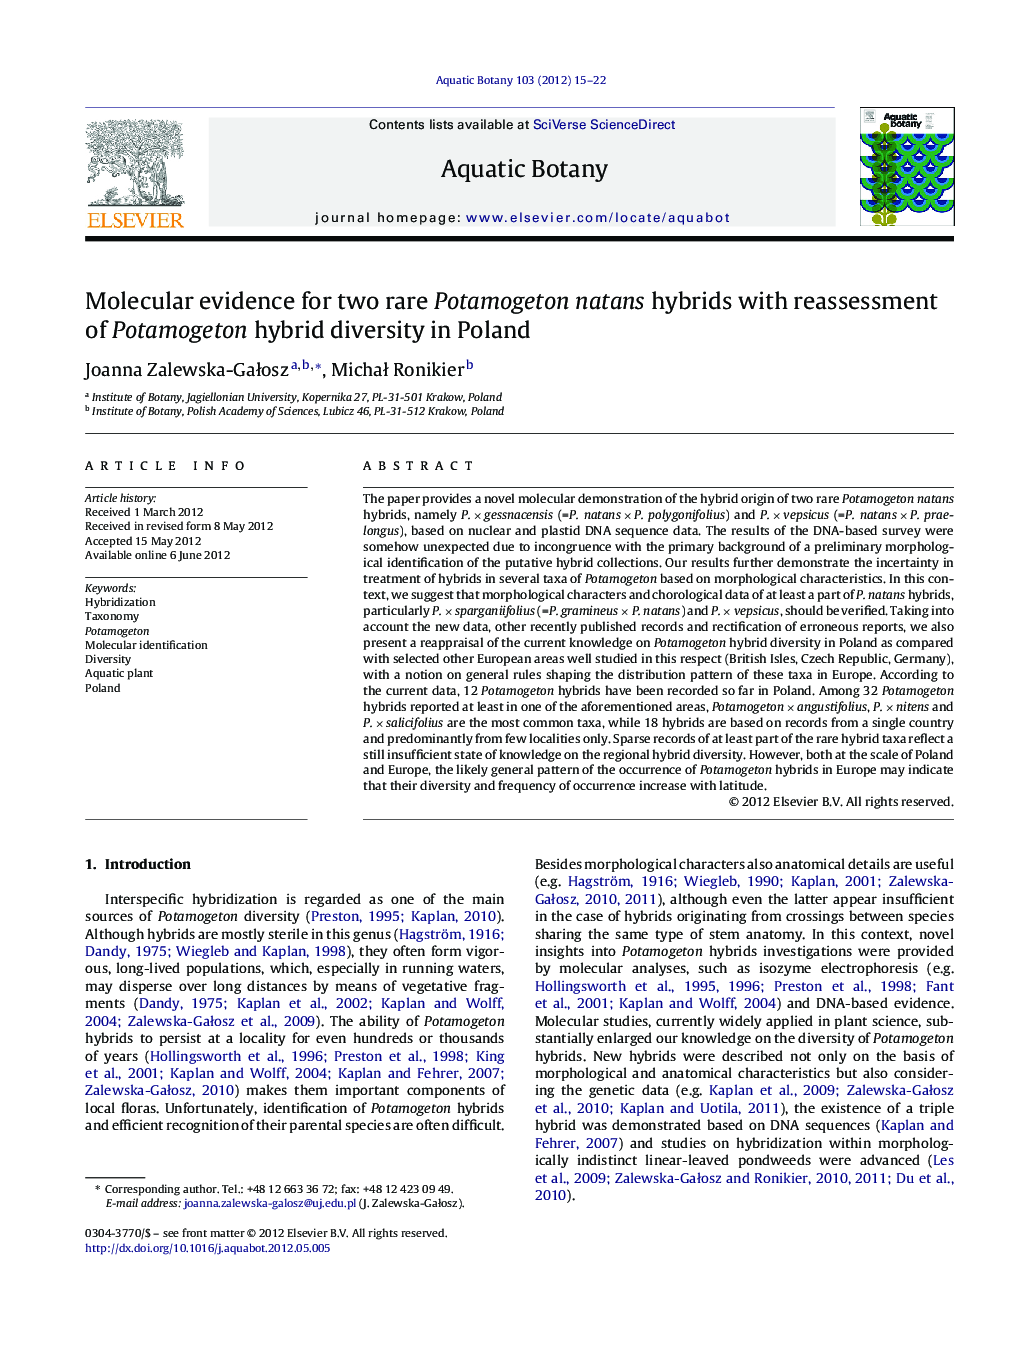 Molecular evidence for two rare Potamogeton natans hybrids with reassessment of Potamogeton hybrid diversity in Poland